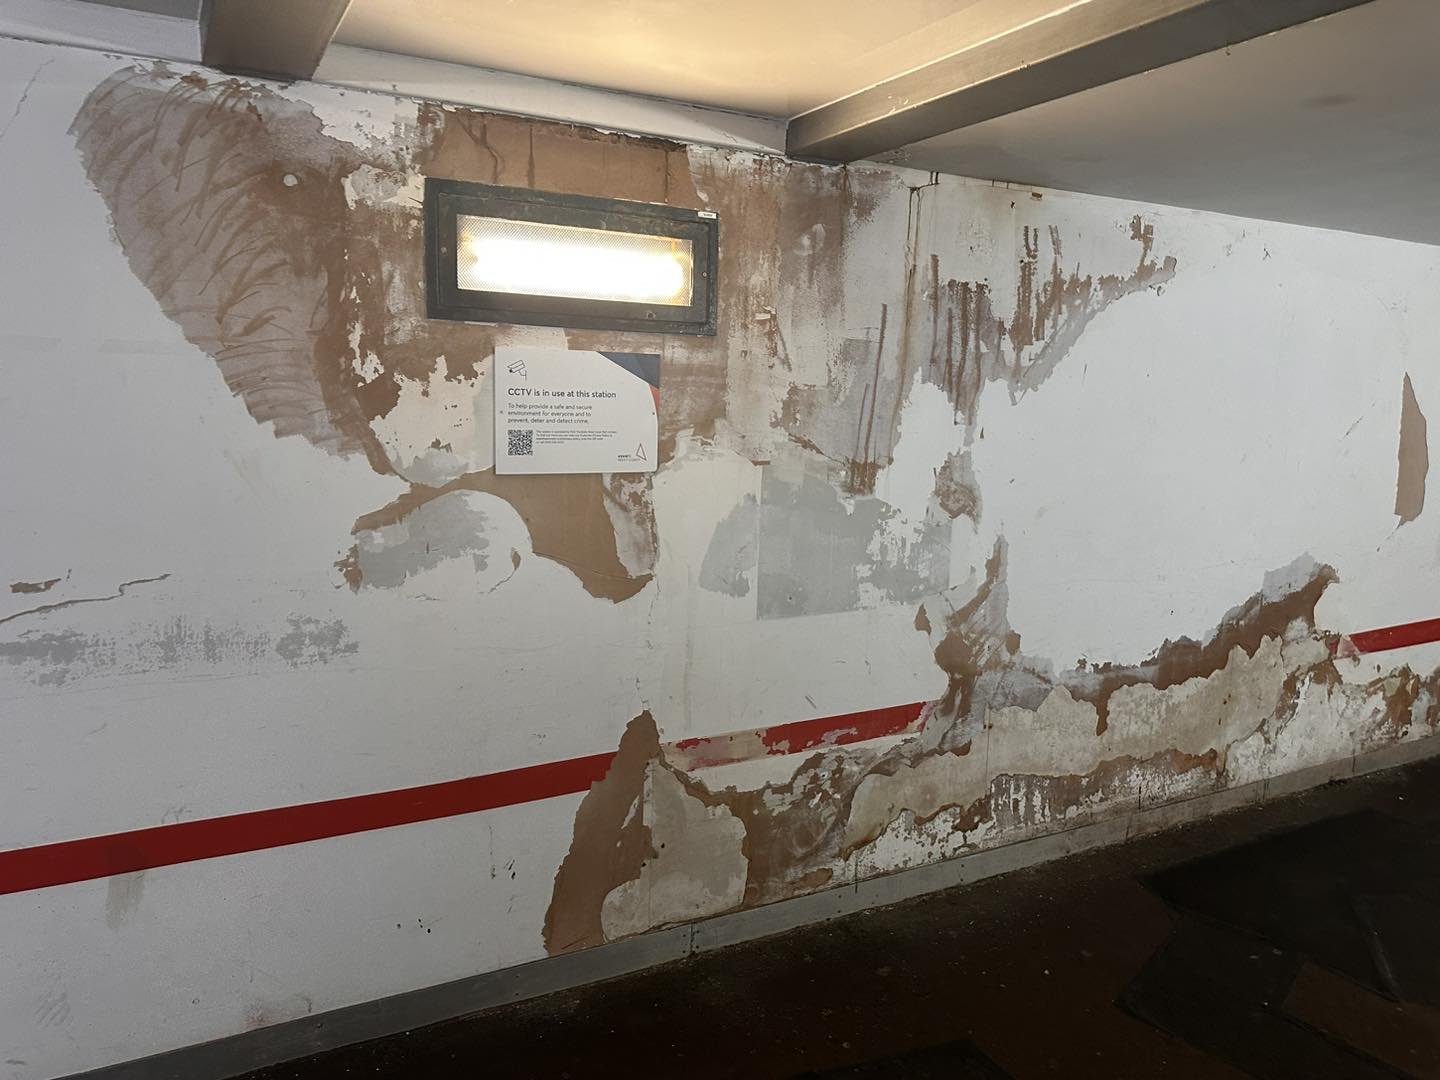    Damaged, peeling walls at Stockport station  . 